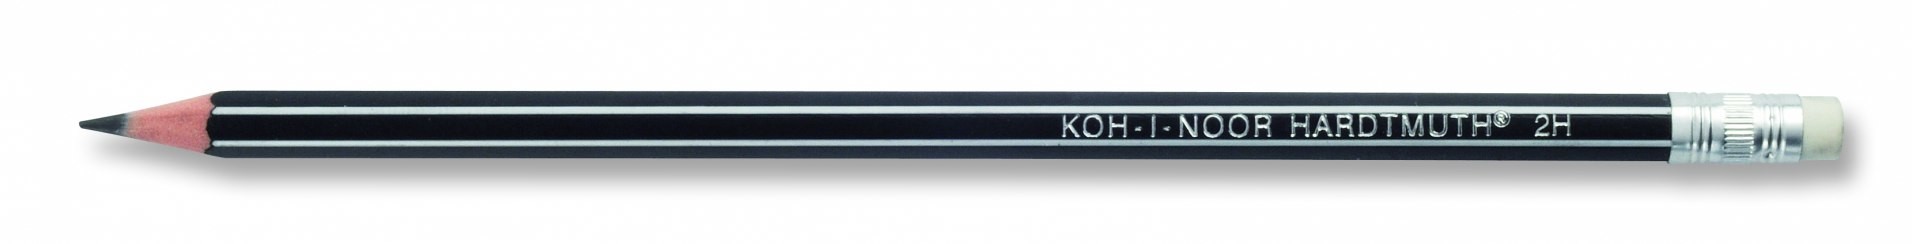 Koh-i-noor Ołówek grafit.1397/2B wygibas z gumka Koh-i-Noor ol 0111021